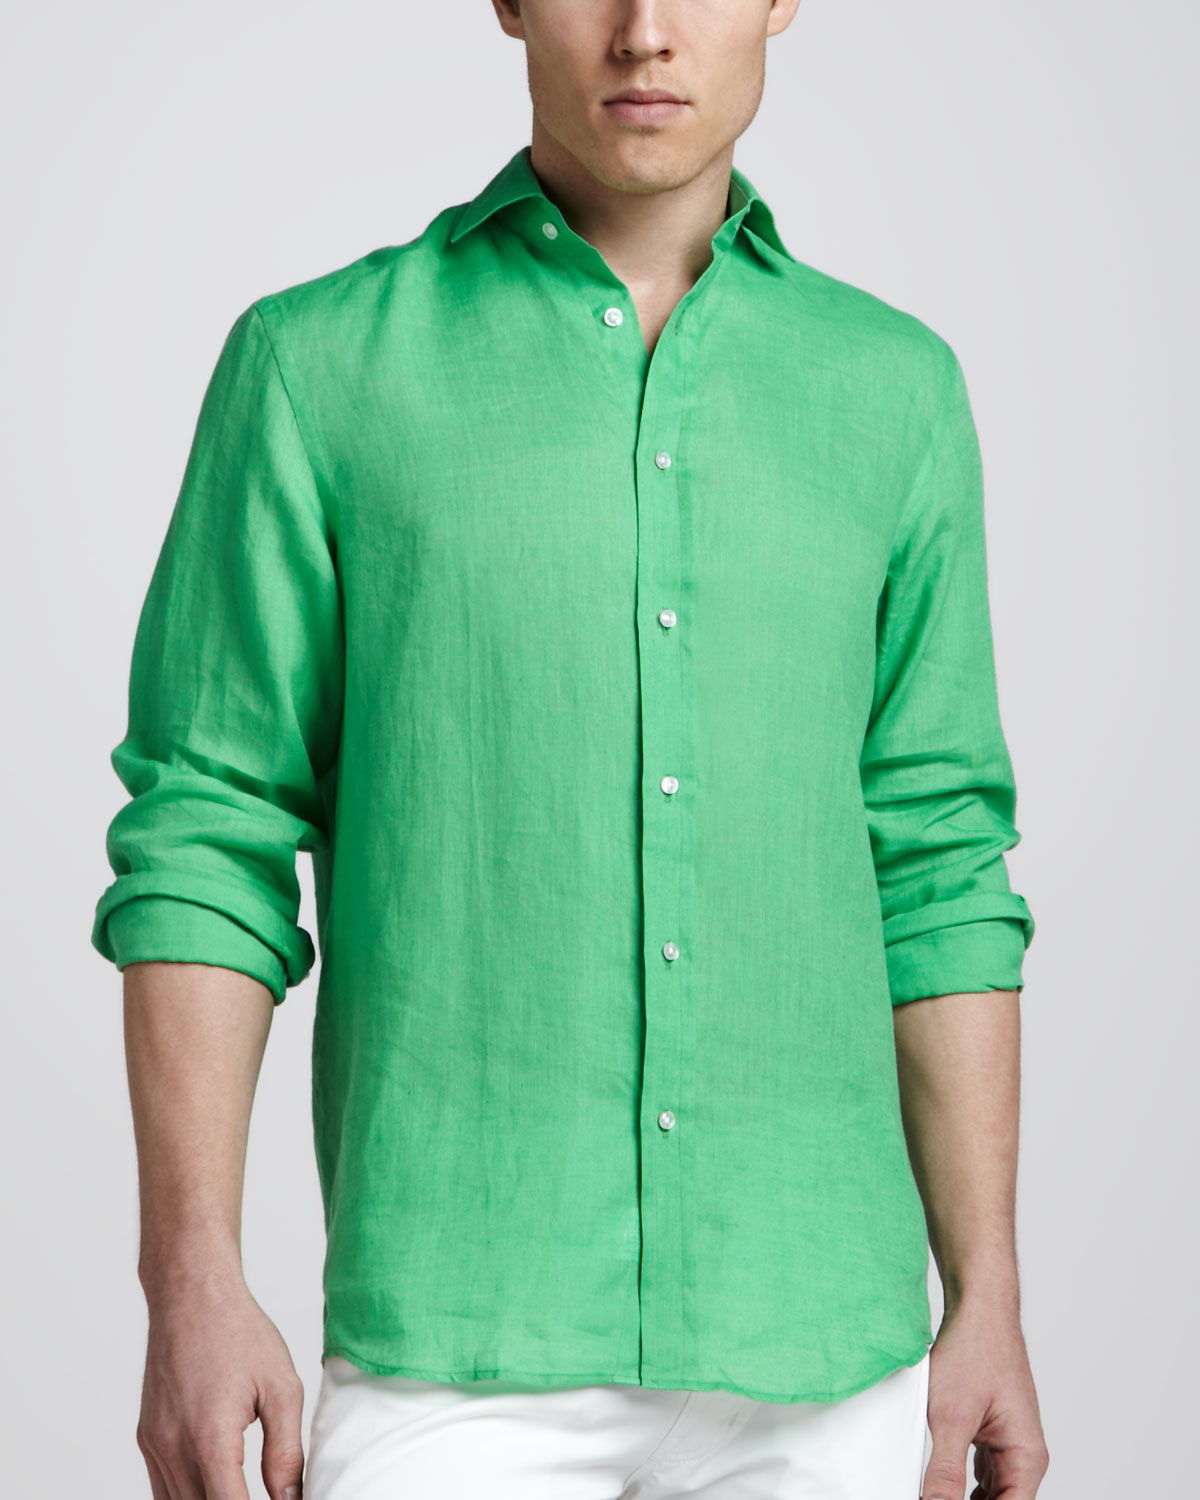 Lyst - Ralph lauren black label Linen Sport Shirt Green in Green for Men